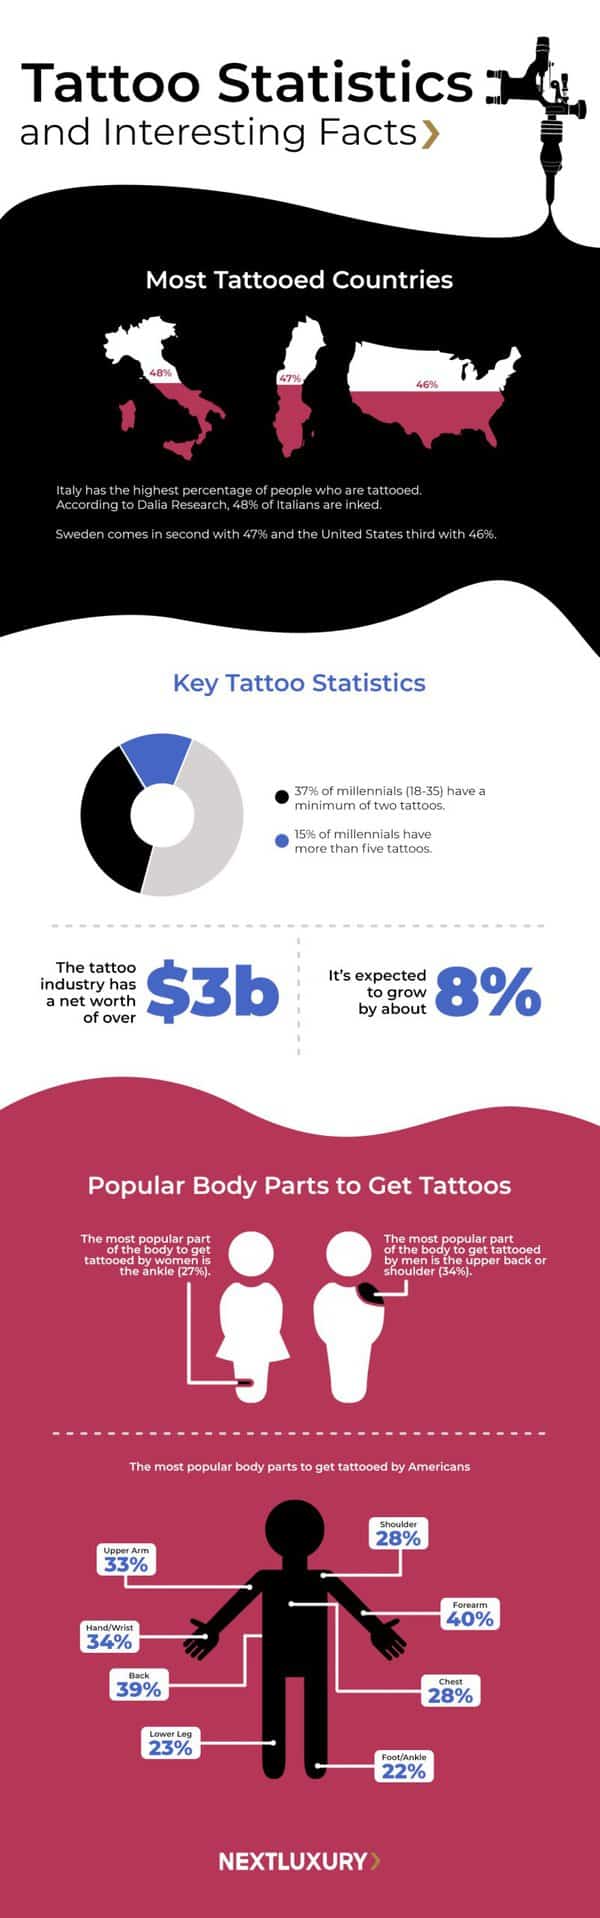 NextLuxury Infographic_Tattoo Stats